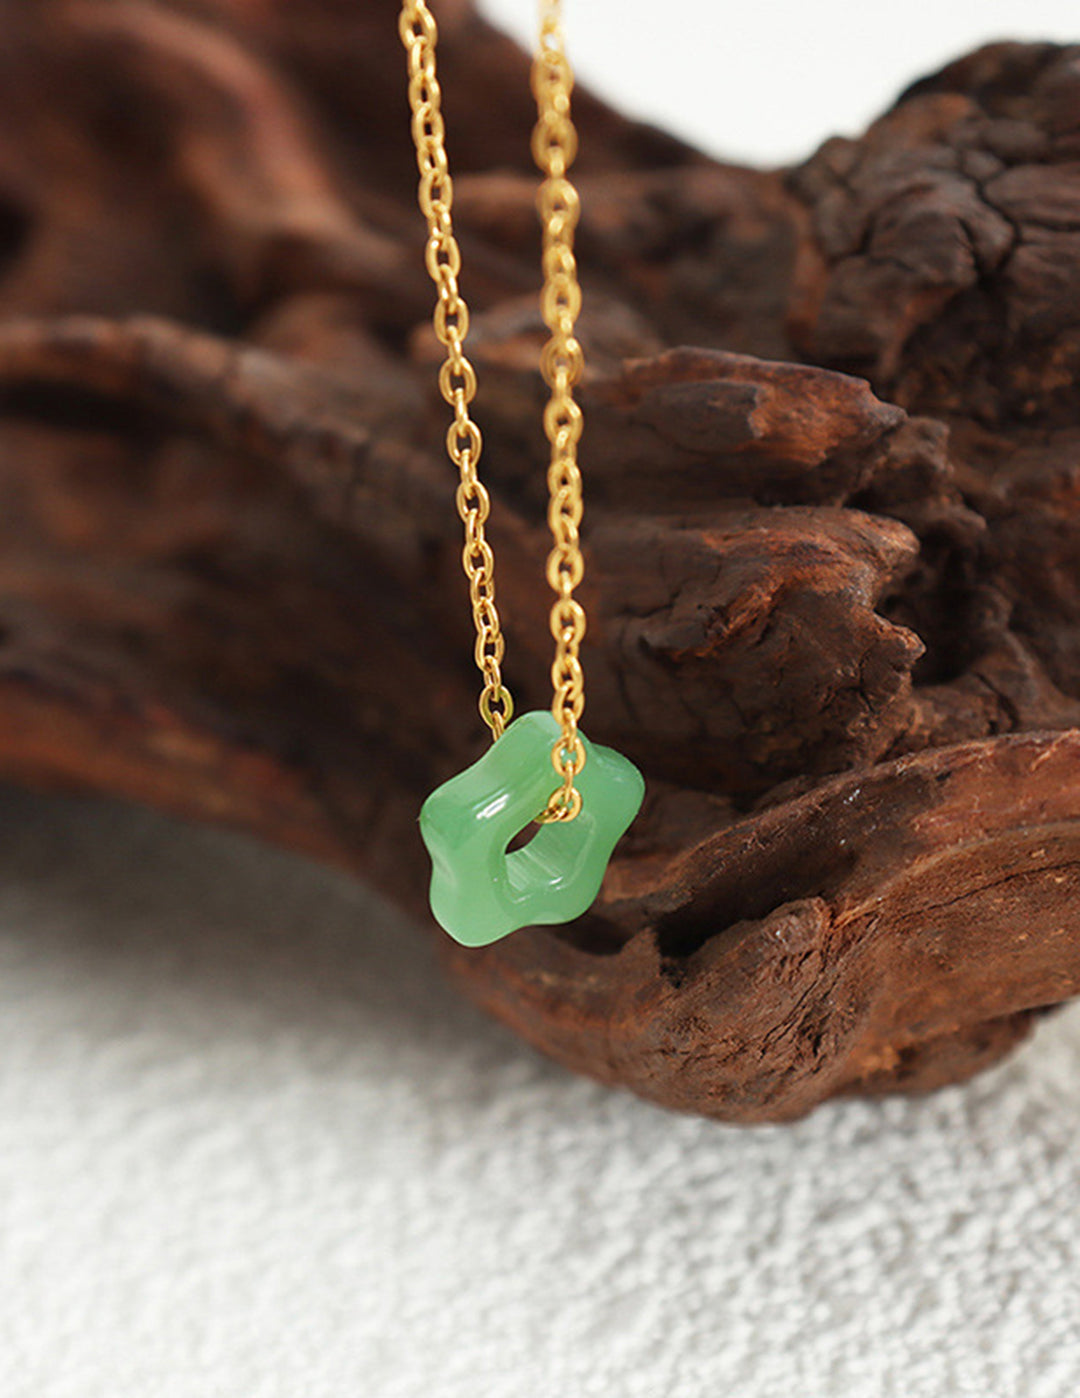 Collar de flor de jade